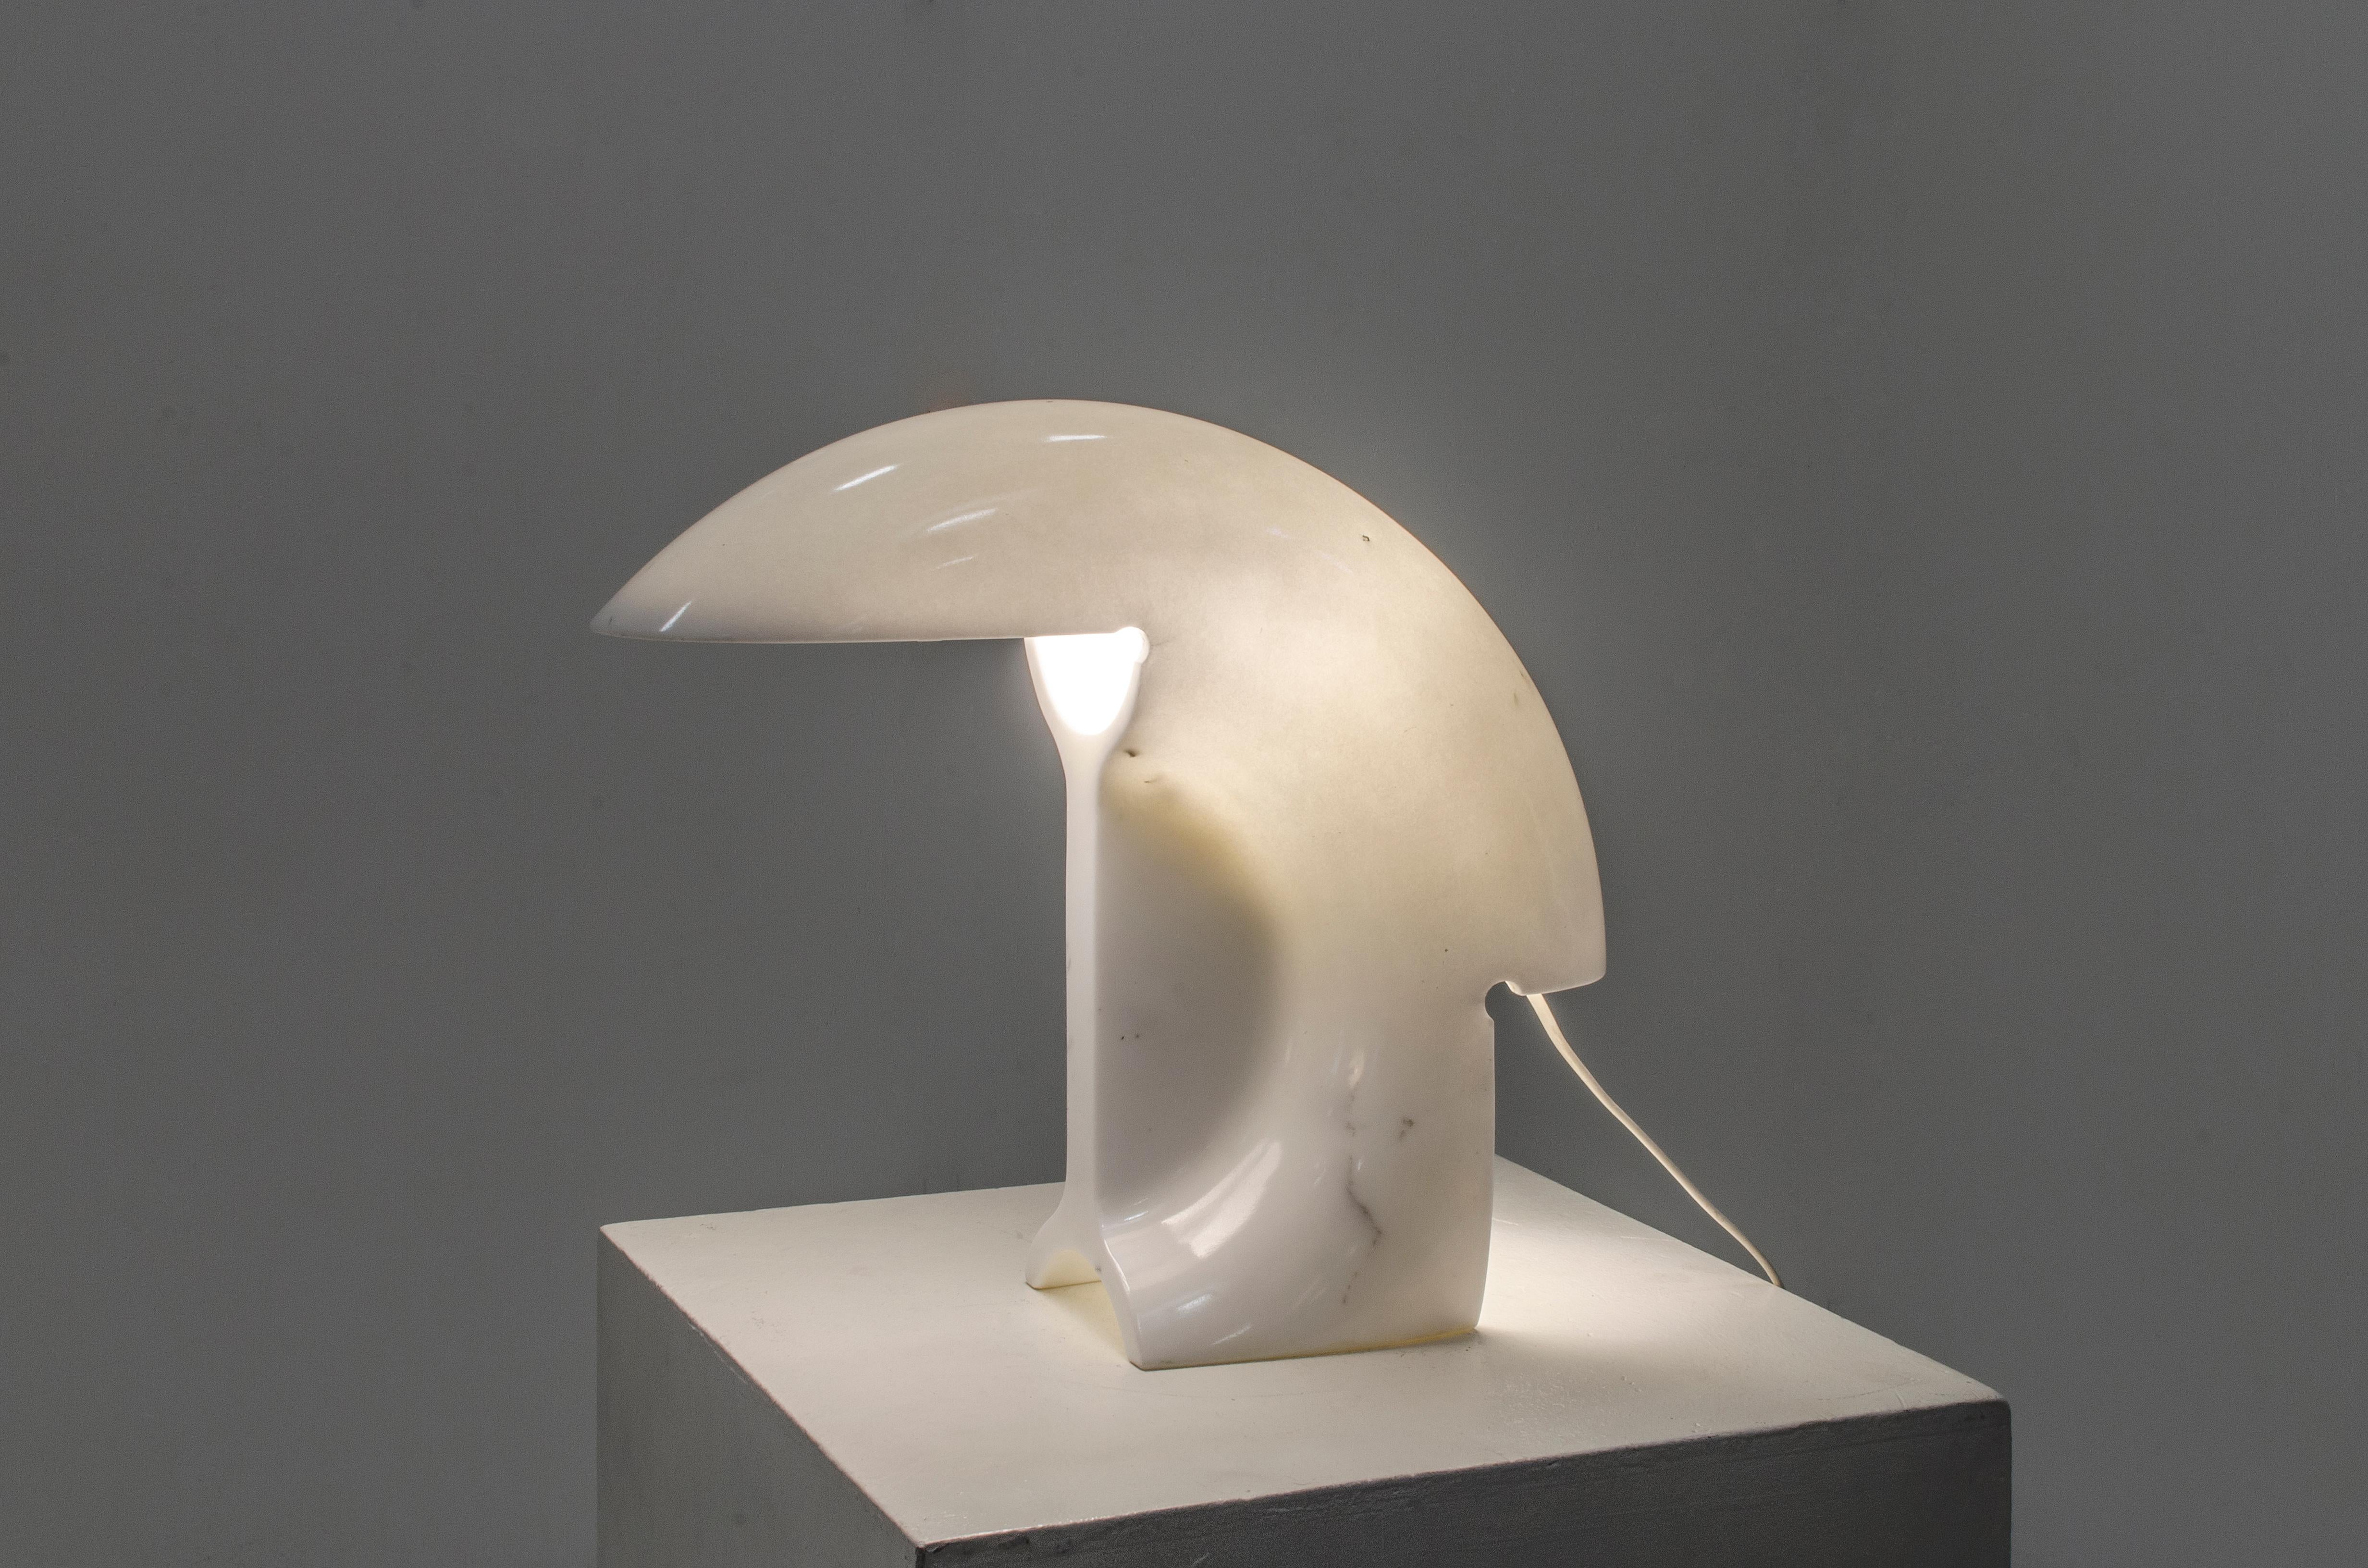 Tobia Scarpa, table lamp, 
Biagio model, Flos production,
Carrear marble, 
circa 1968, Italy.
Height 34,5 cm, width 40 cm, depth 13 cm.
Biography similar model: Giuliana Gramigna, 